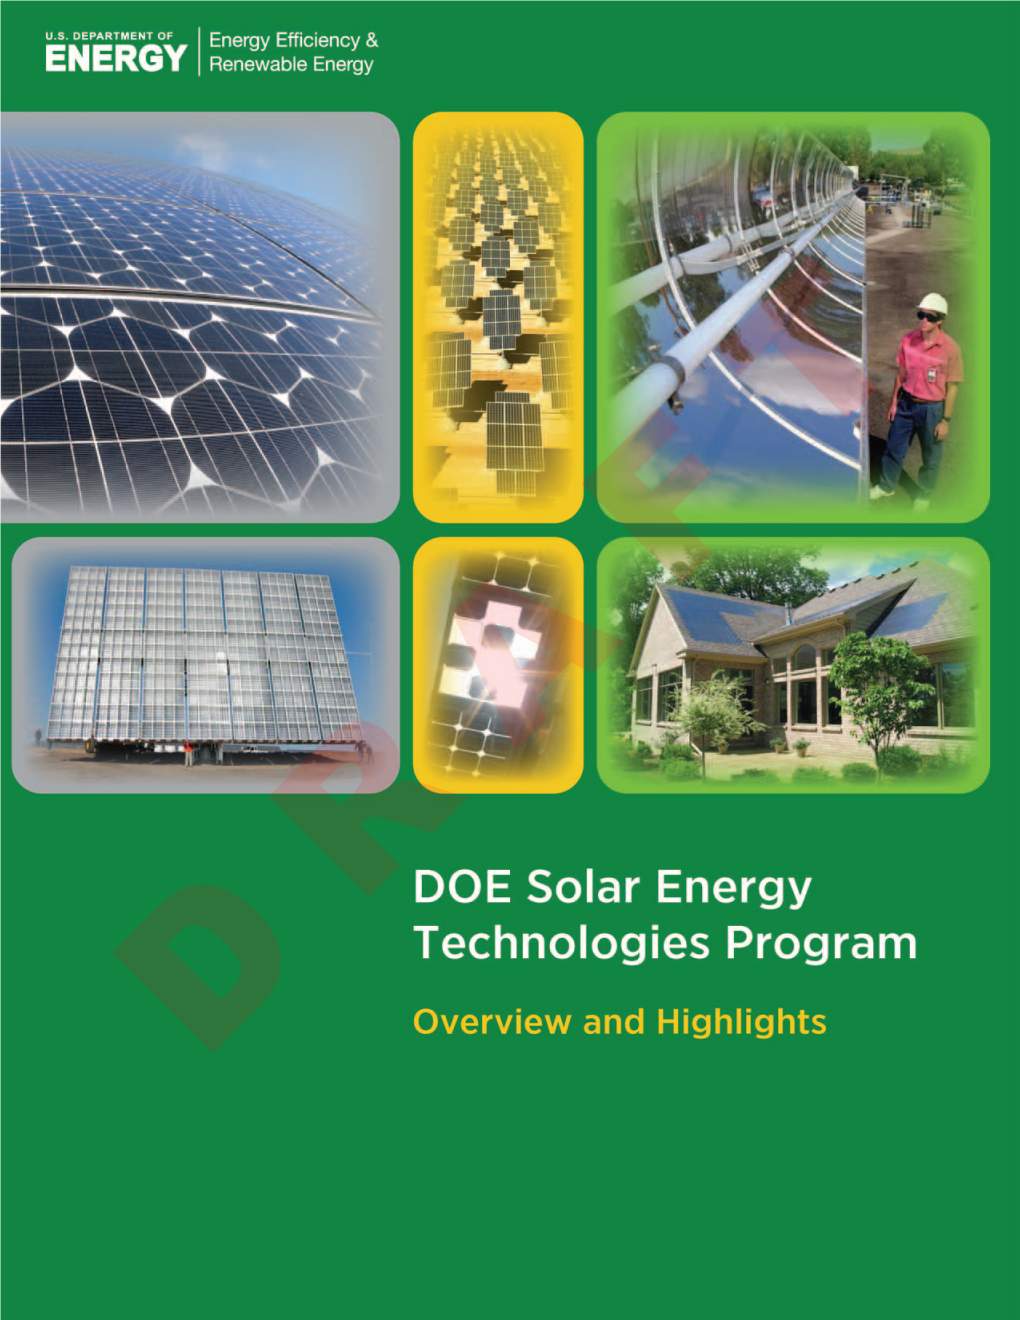 DOE Solar Energy Technologies Program Overview and Highlights